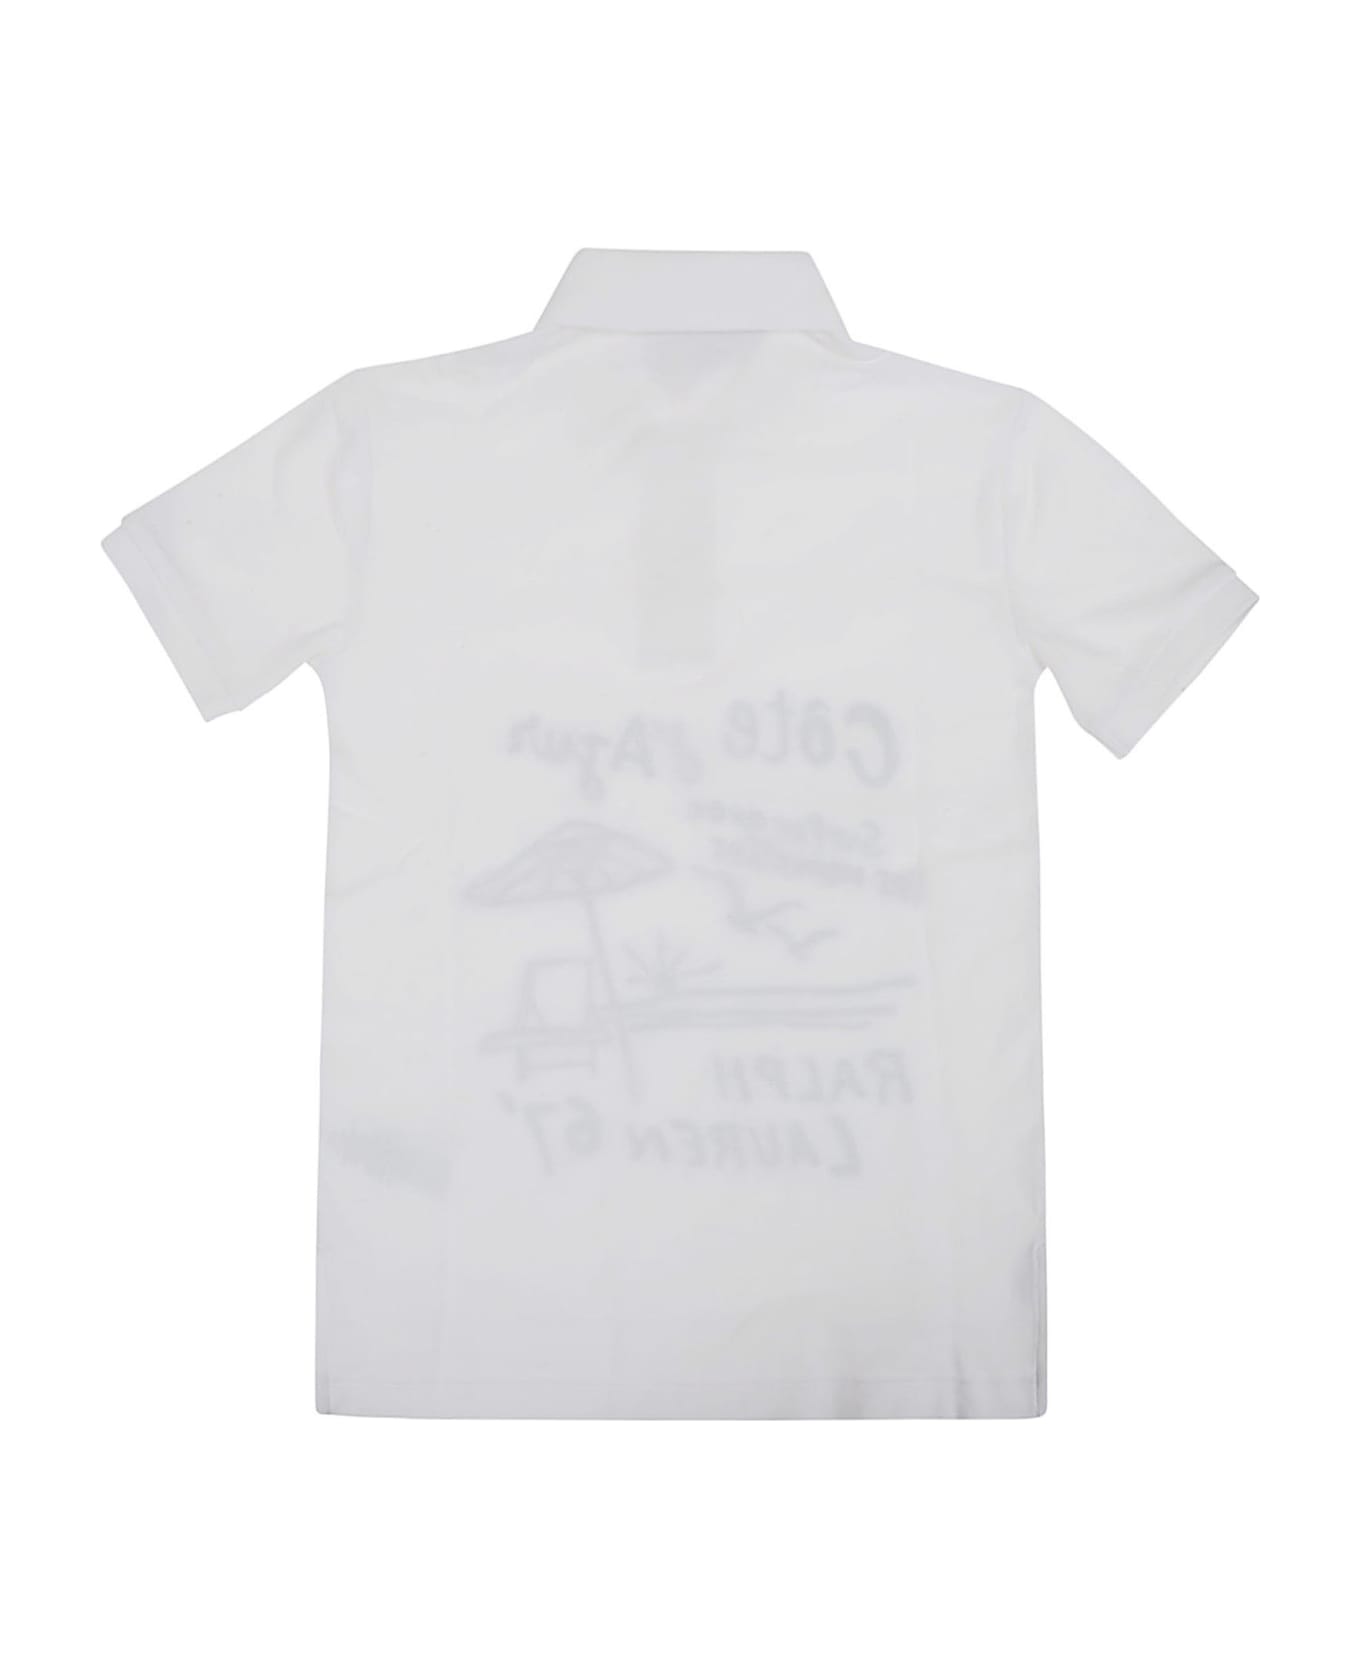 Ralph Lauren Sskcm1-knit Shirts-polo Shirt - Classic Oxford White